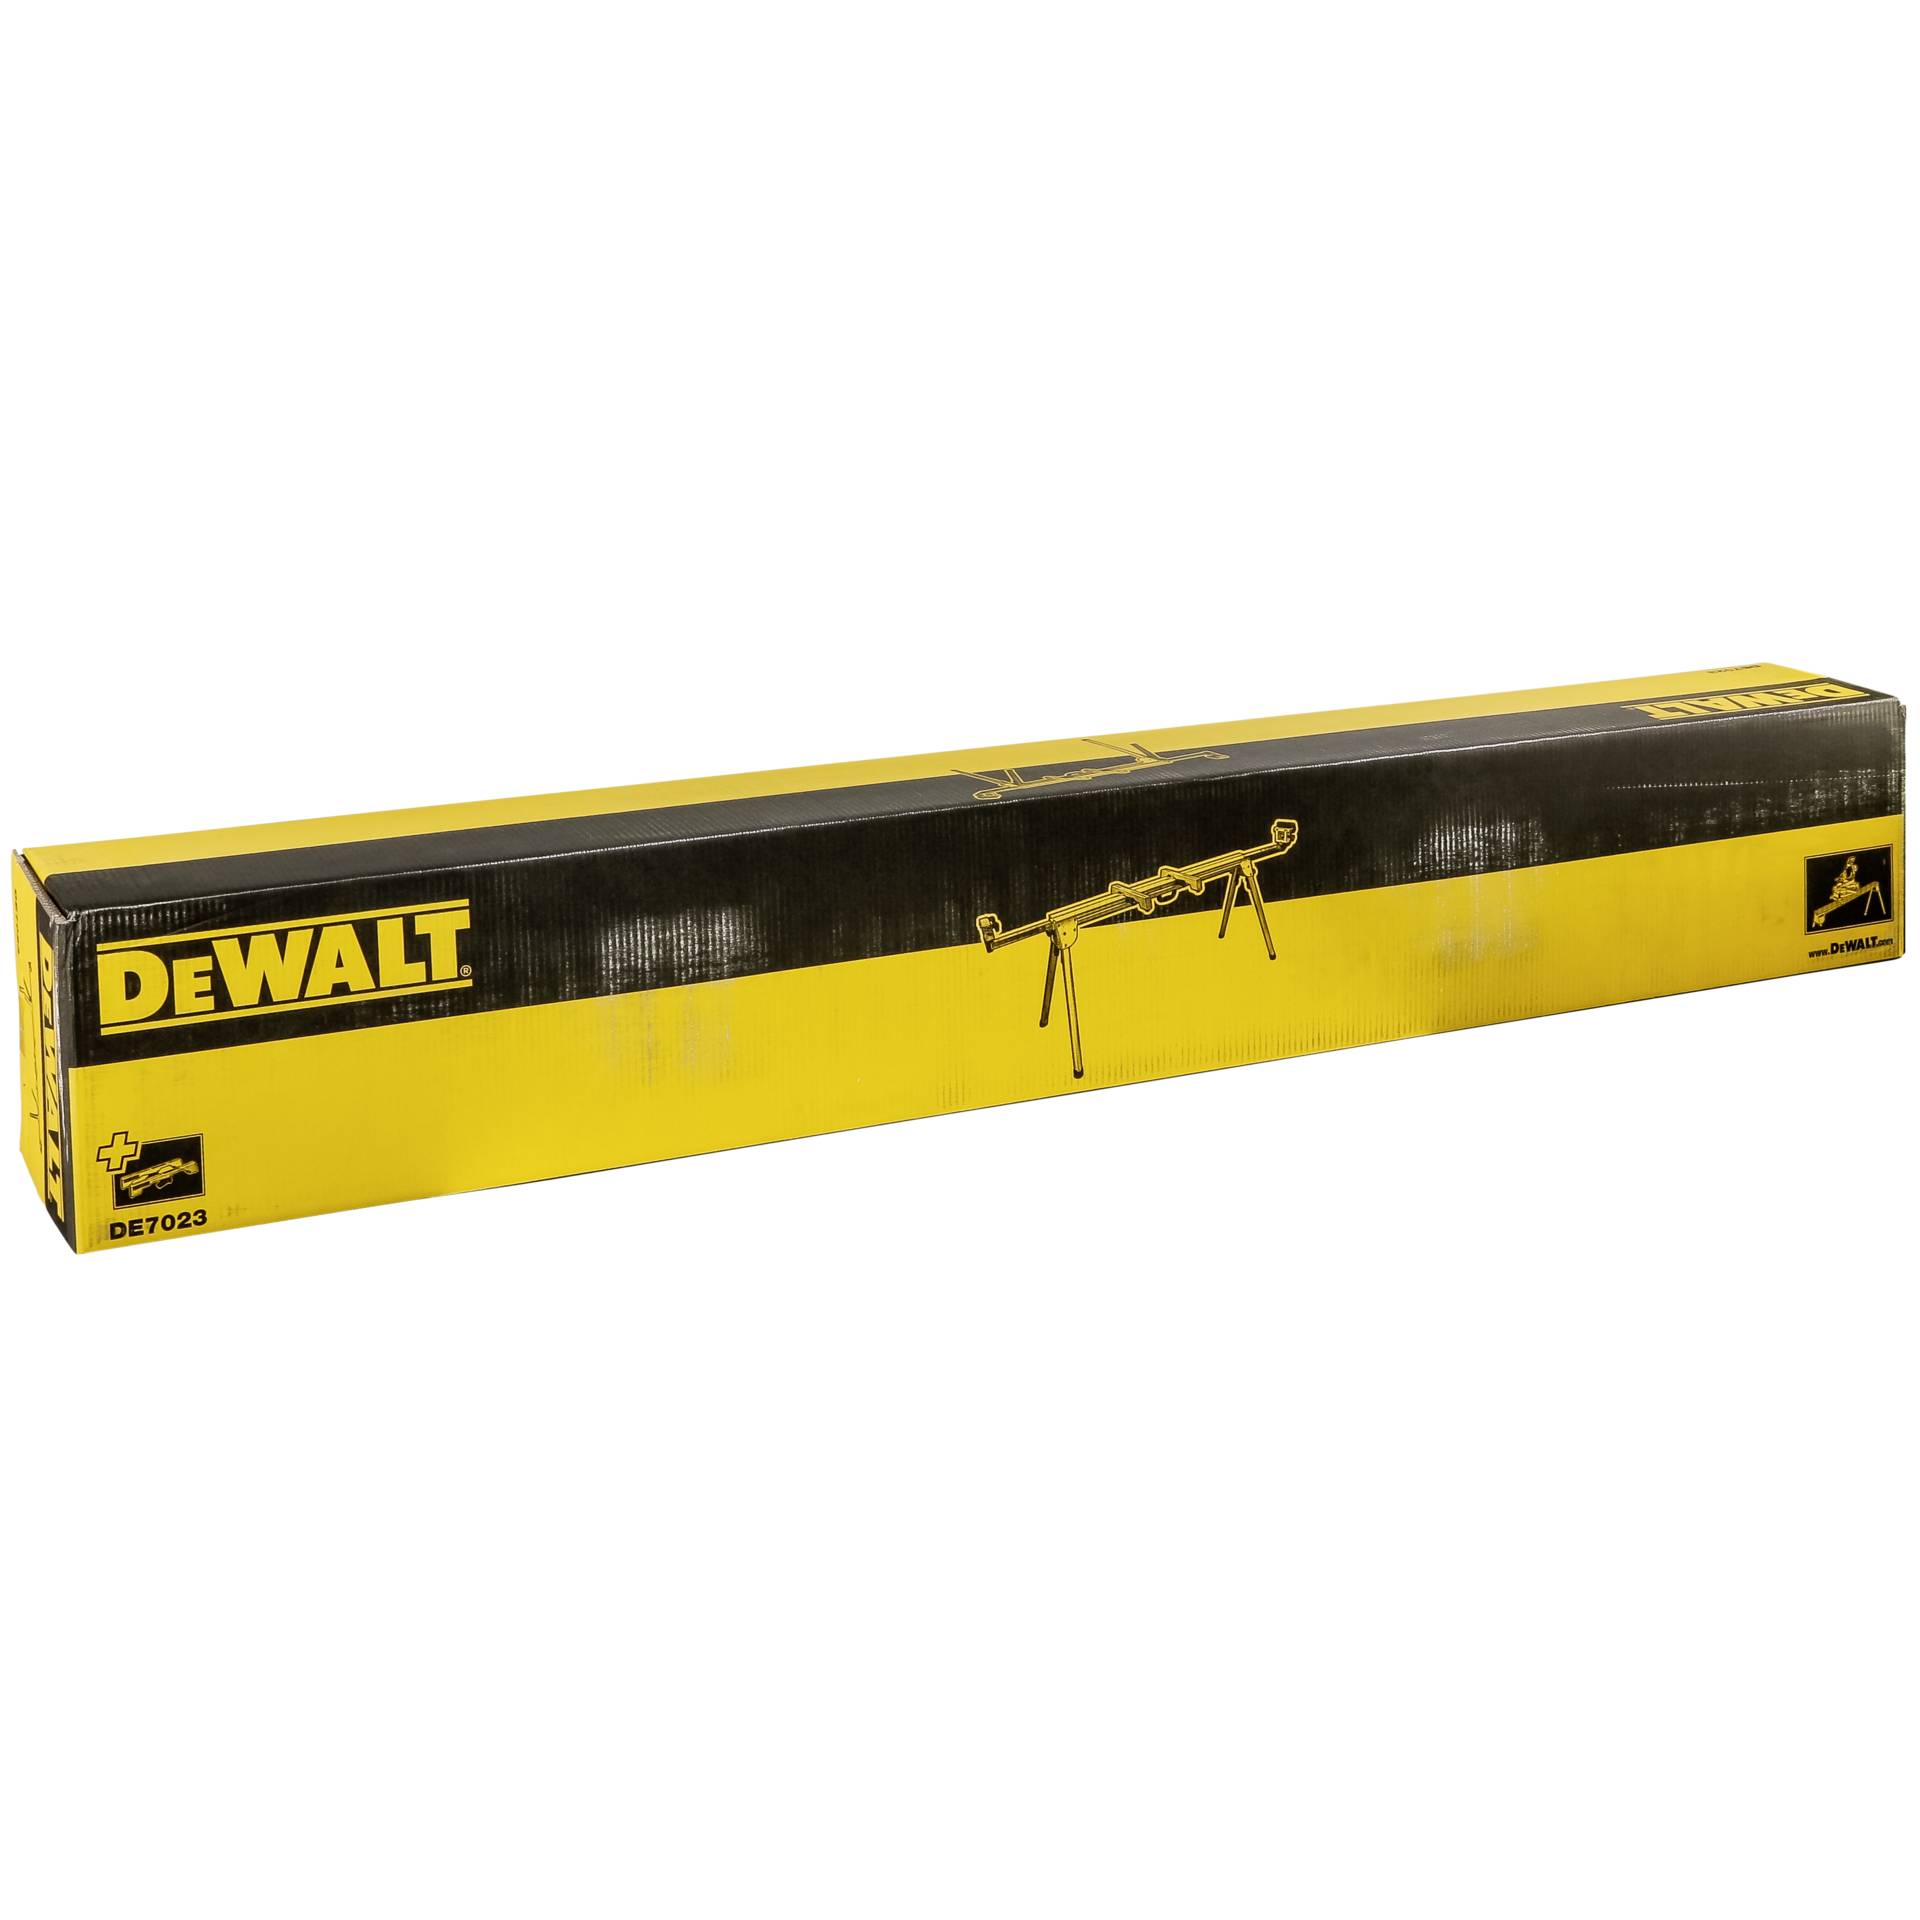 DeWALT DE7023-XJ mitre saw stand 4 leg(s) Aluminium, Black, Yellow